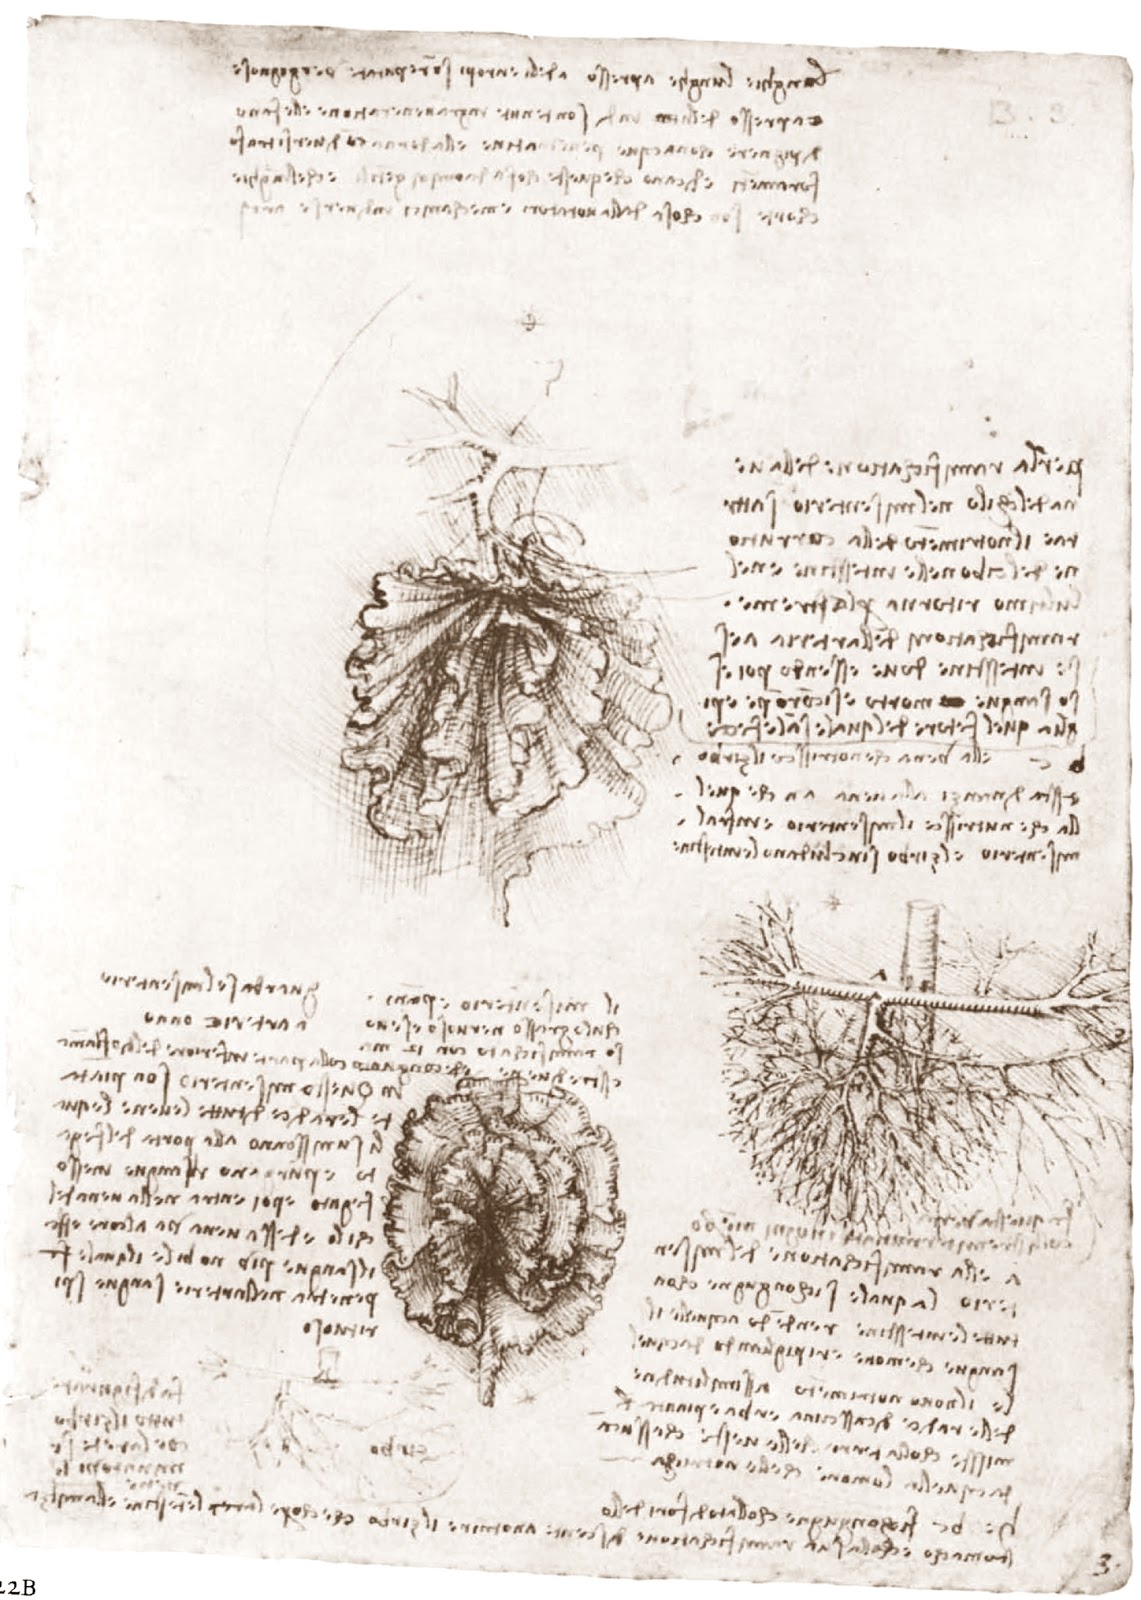 Leonardo+da+Vinci-1452-1519 (785).jpg